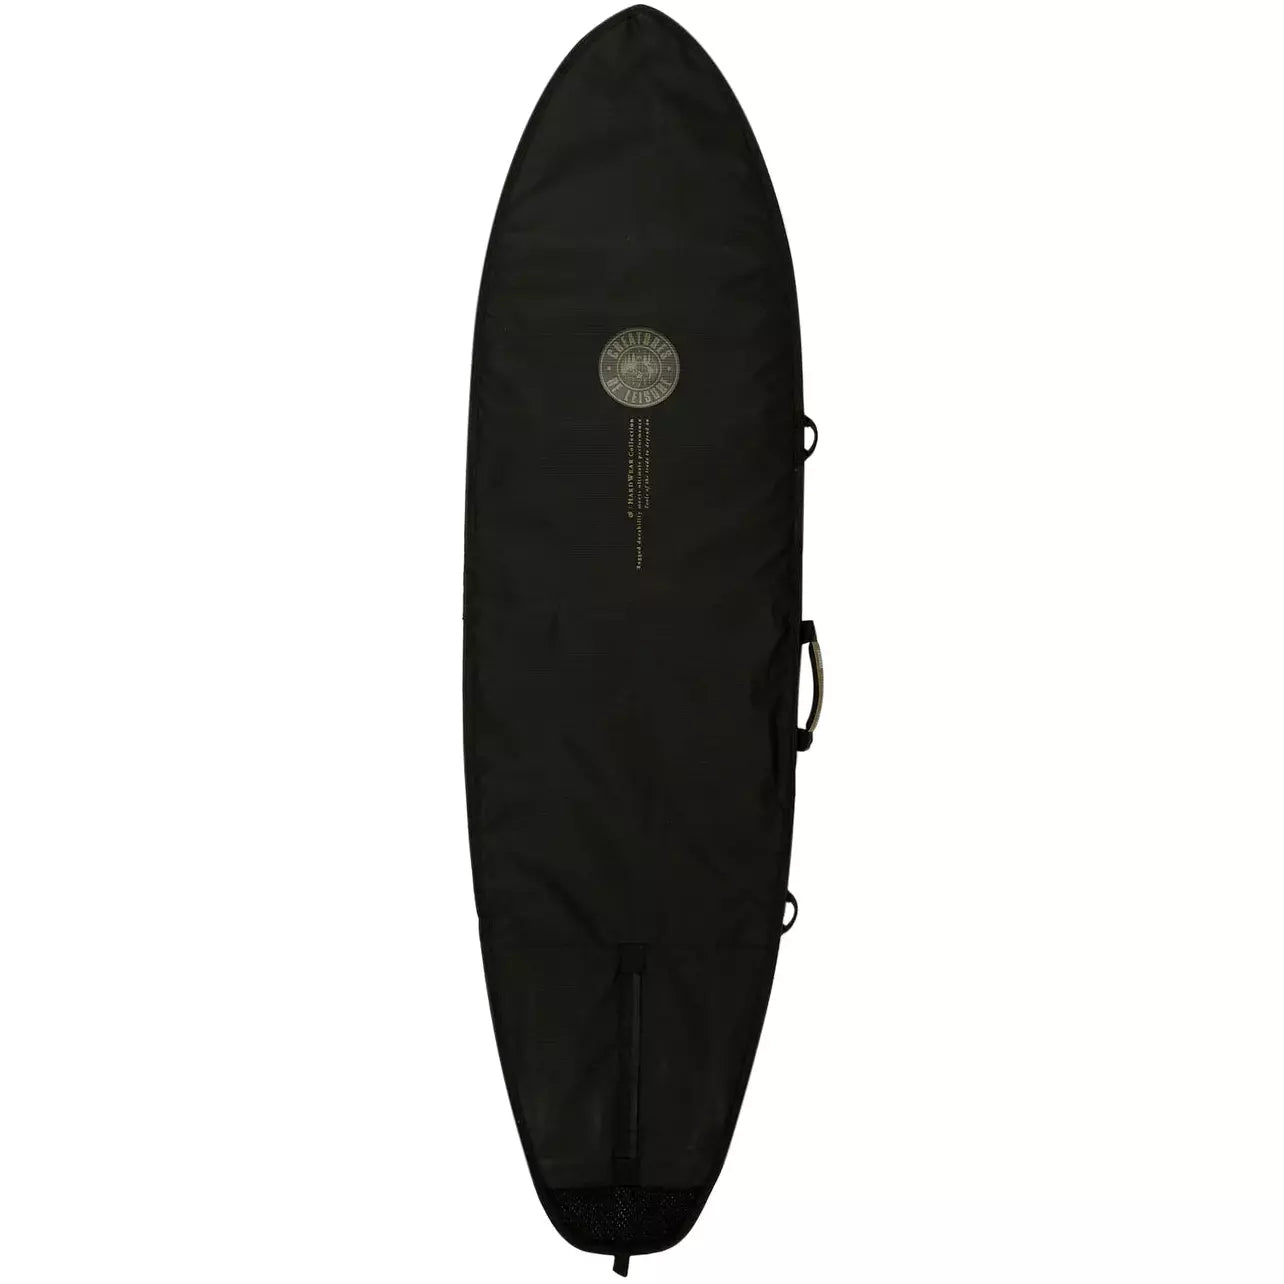 Creatures of Leisure Hardware Mid Length Use Board Bag - Military Black - Seaside Surf Shop 